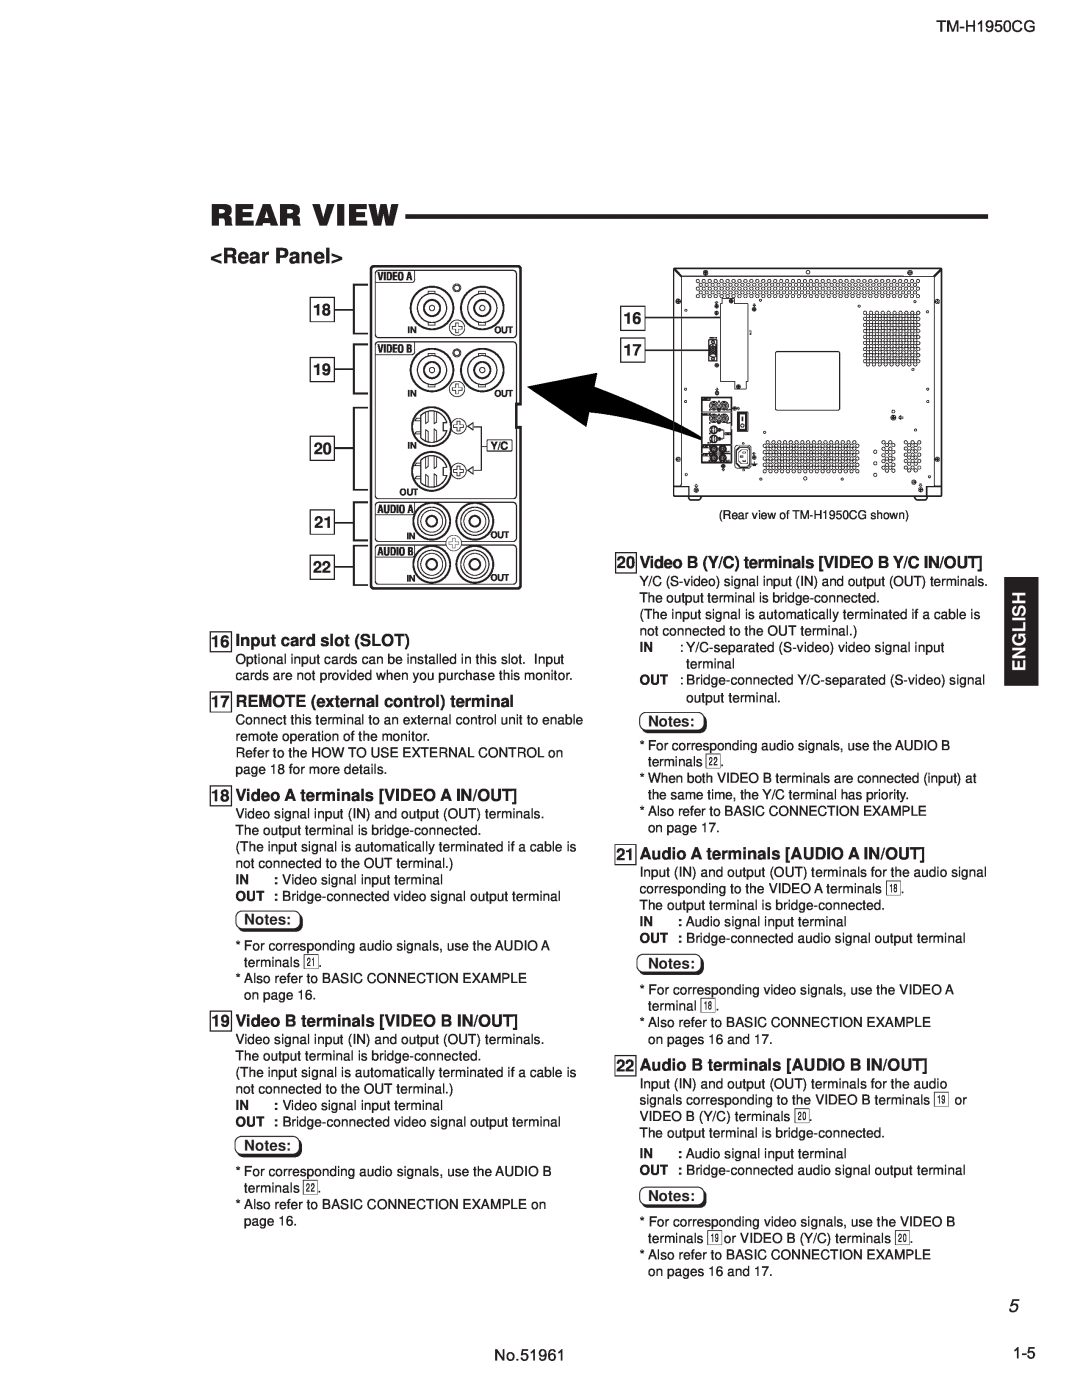 JVC TM-H1950CG operating instructions Rear View, Rear Panel, No.51961 